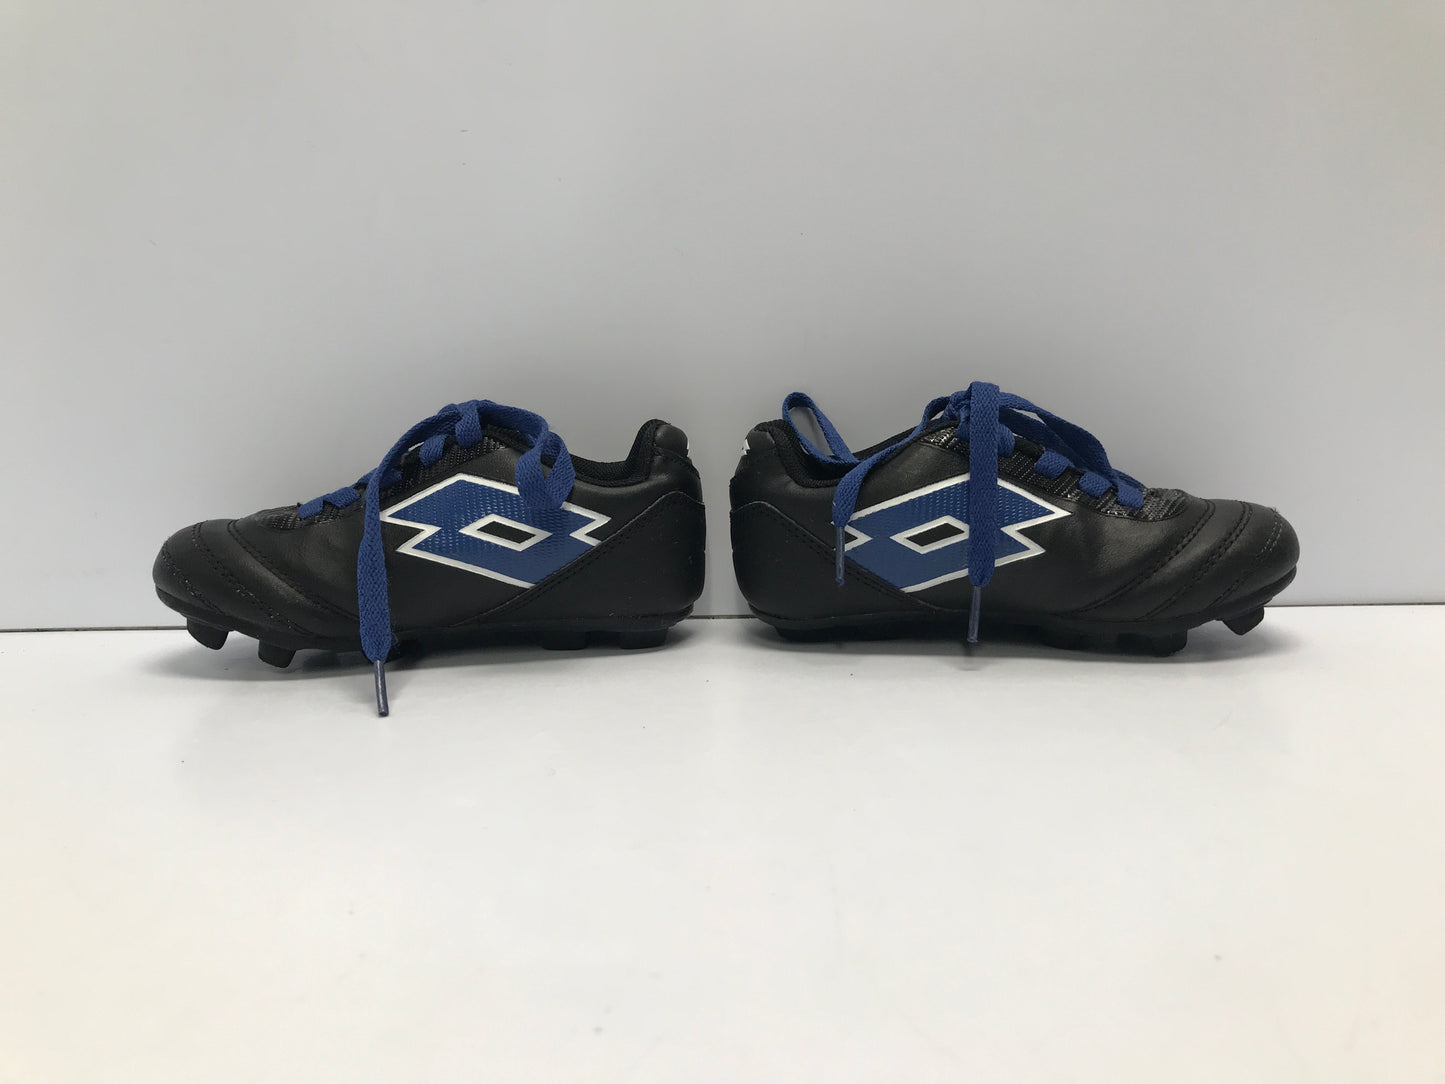 Soccer Shoes Cleats Child Size 10 Lotto Black Blue Excellent